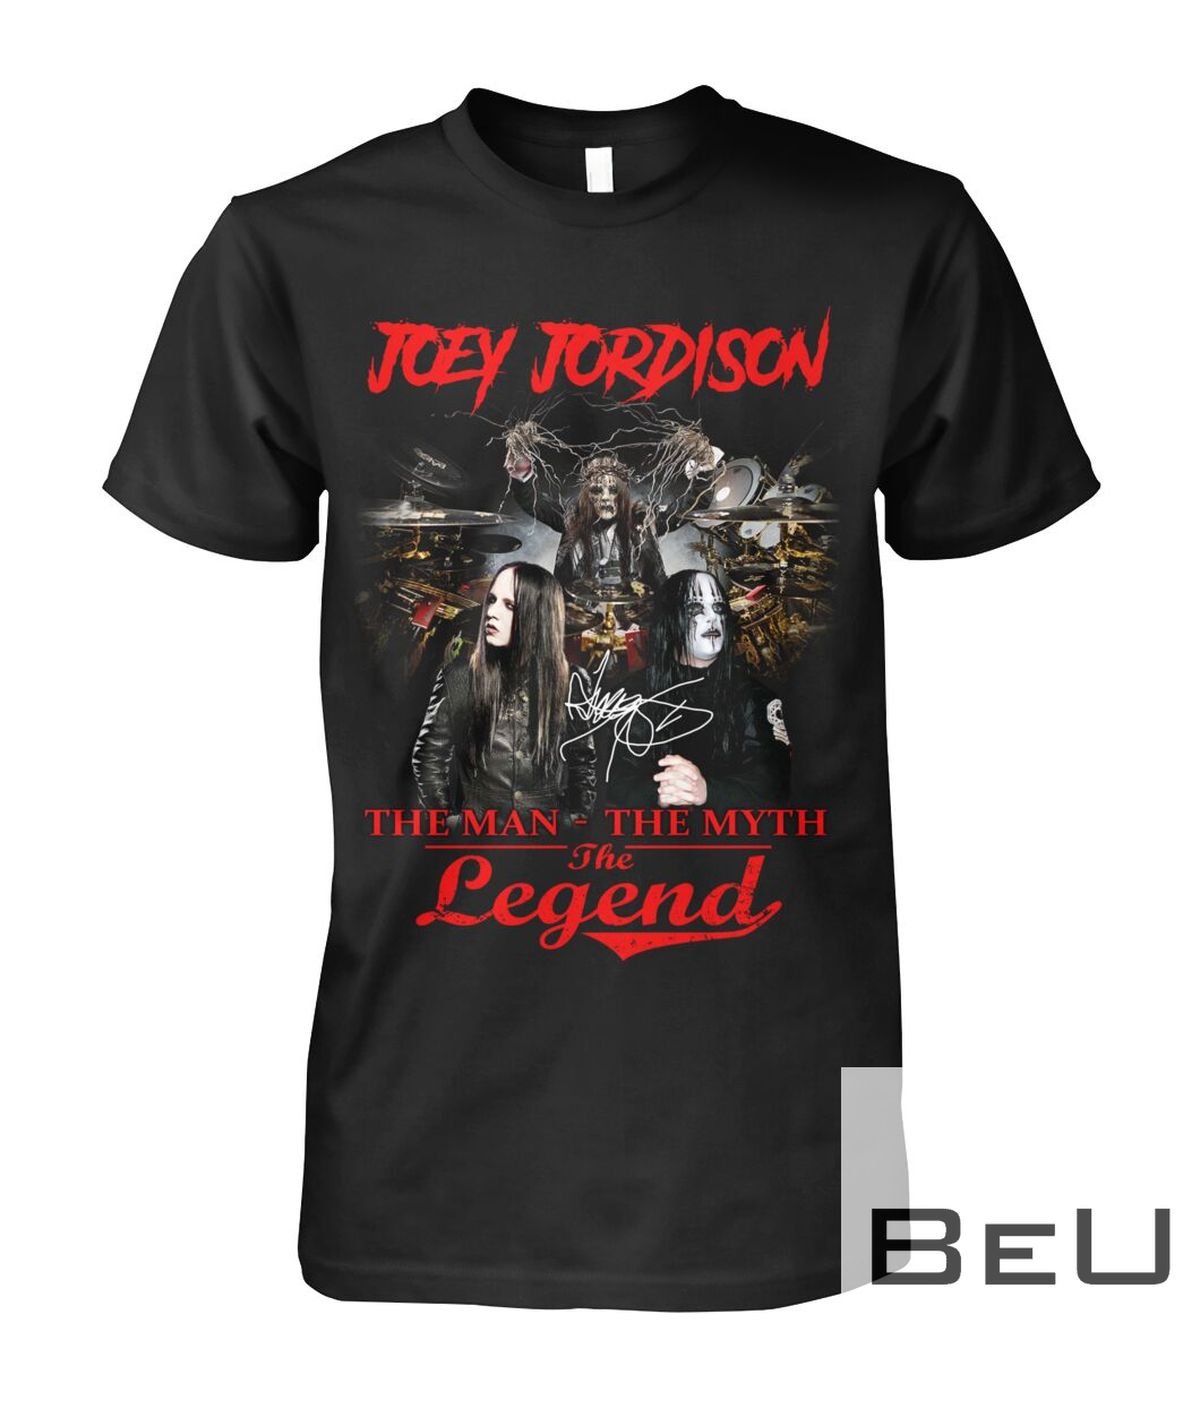 Joey Jordison The Man The Myth The Legend Shirt